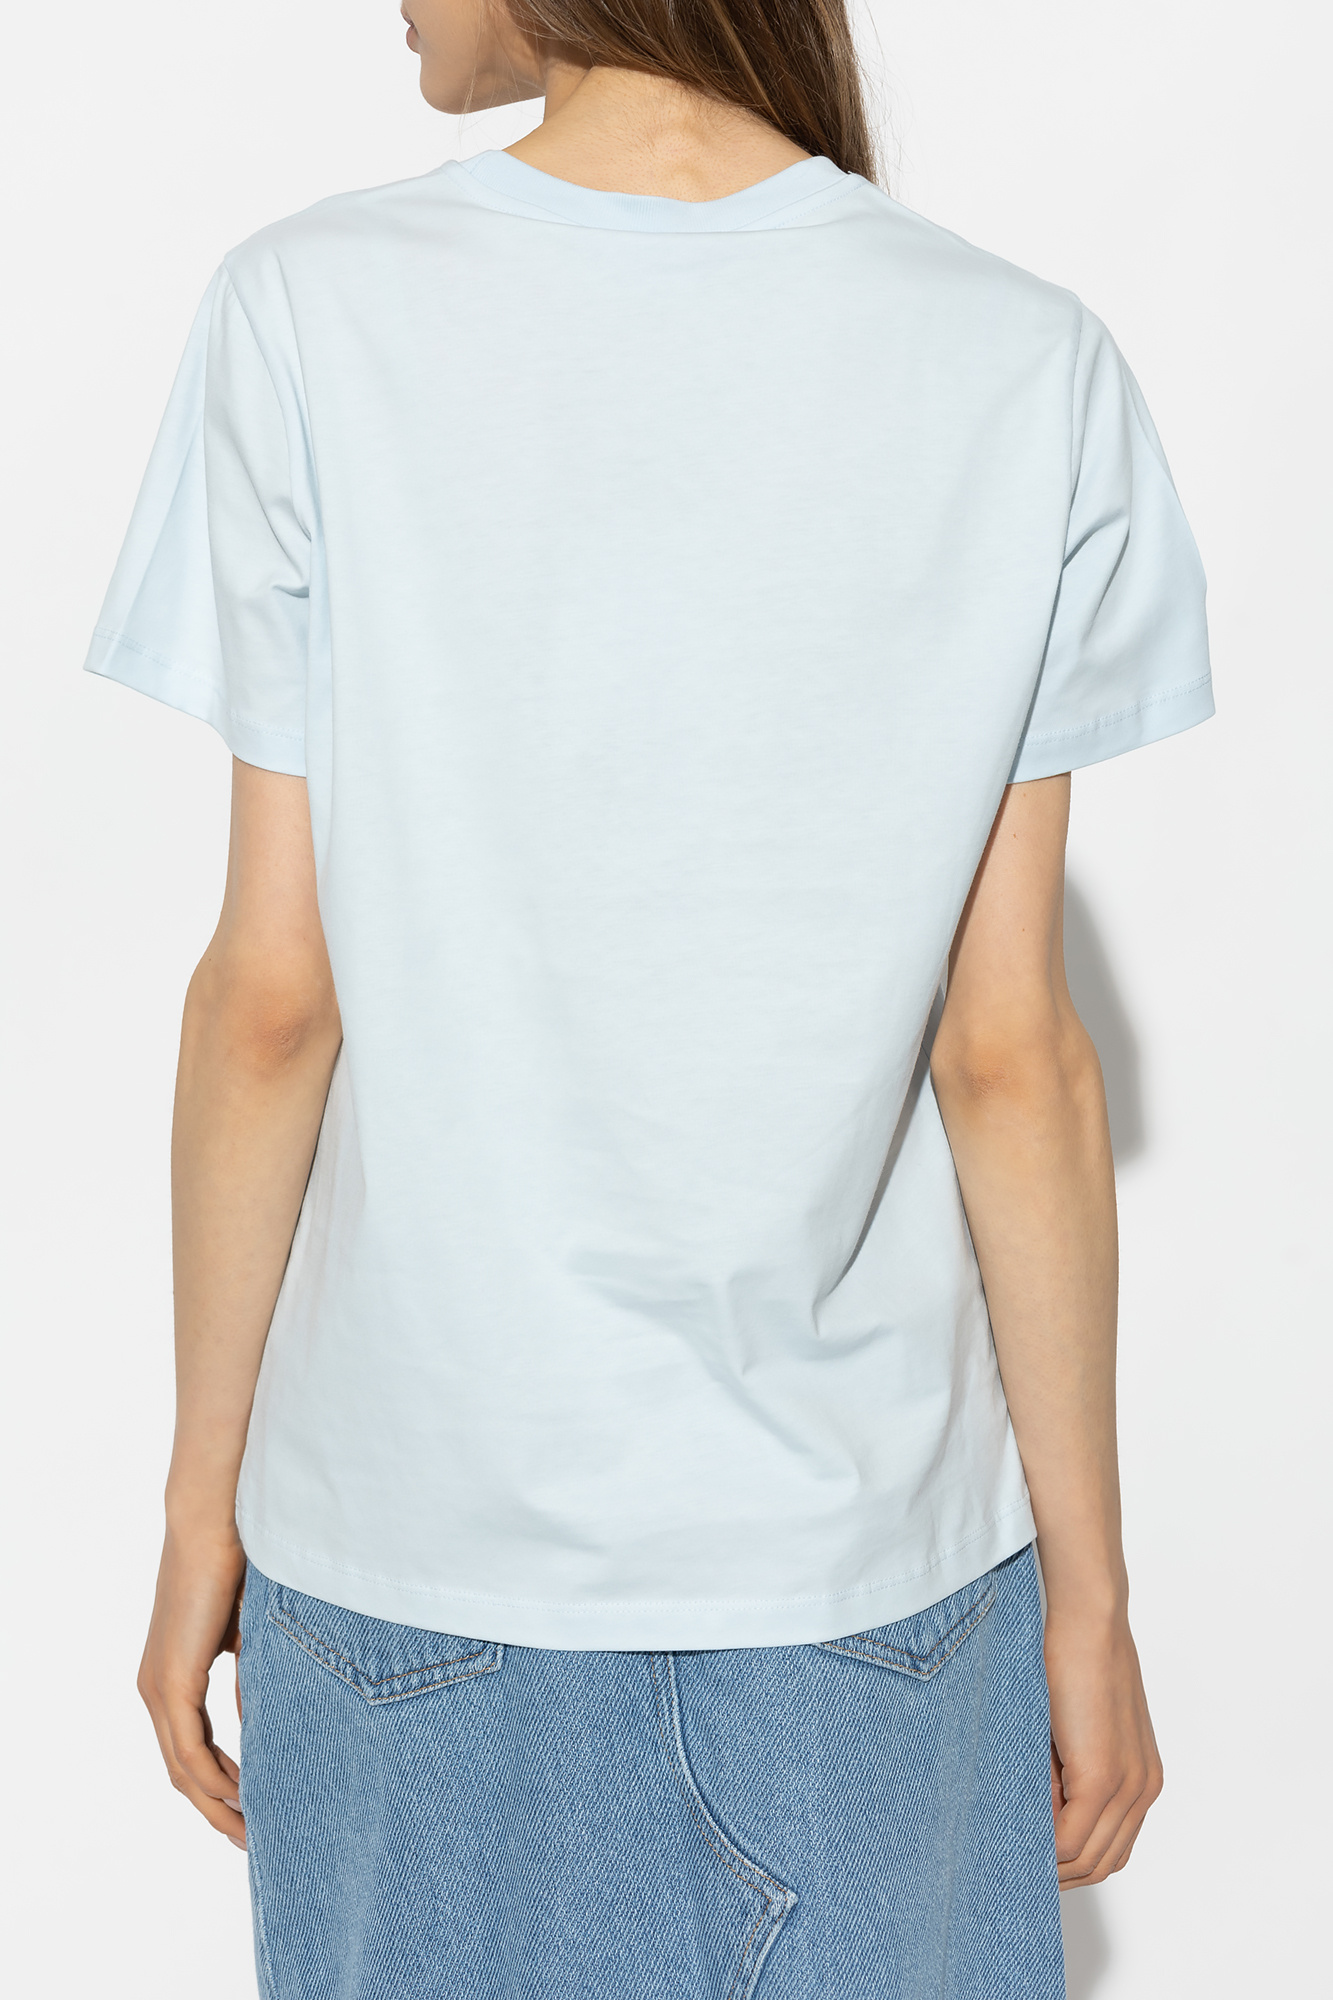 Lightly Padded Seamless Wired T-Shirt Bra